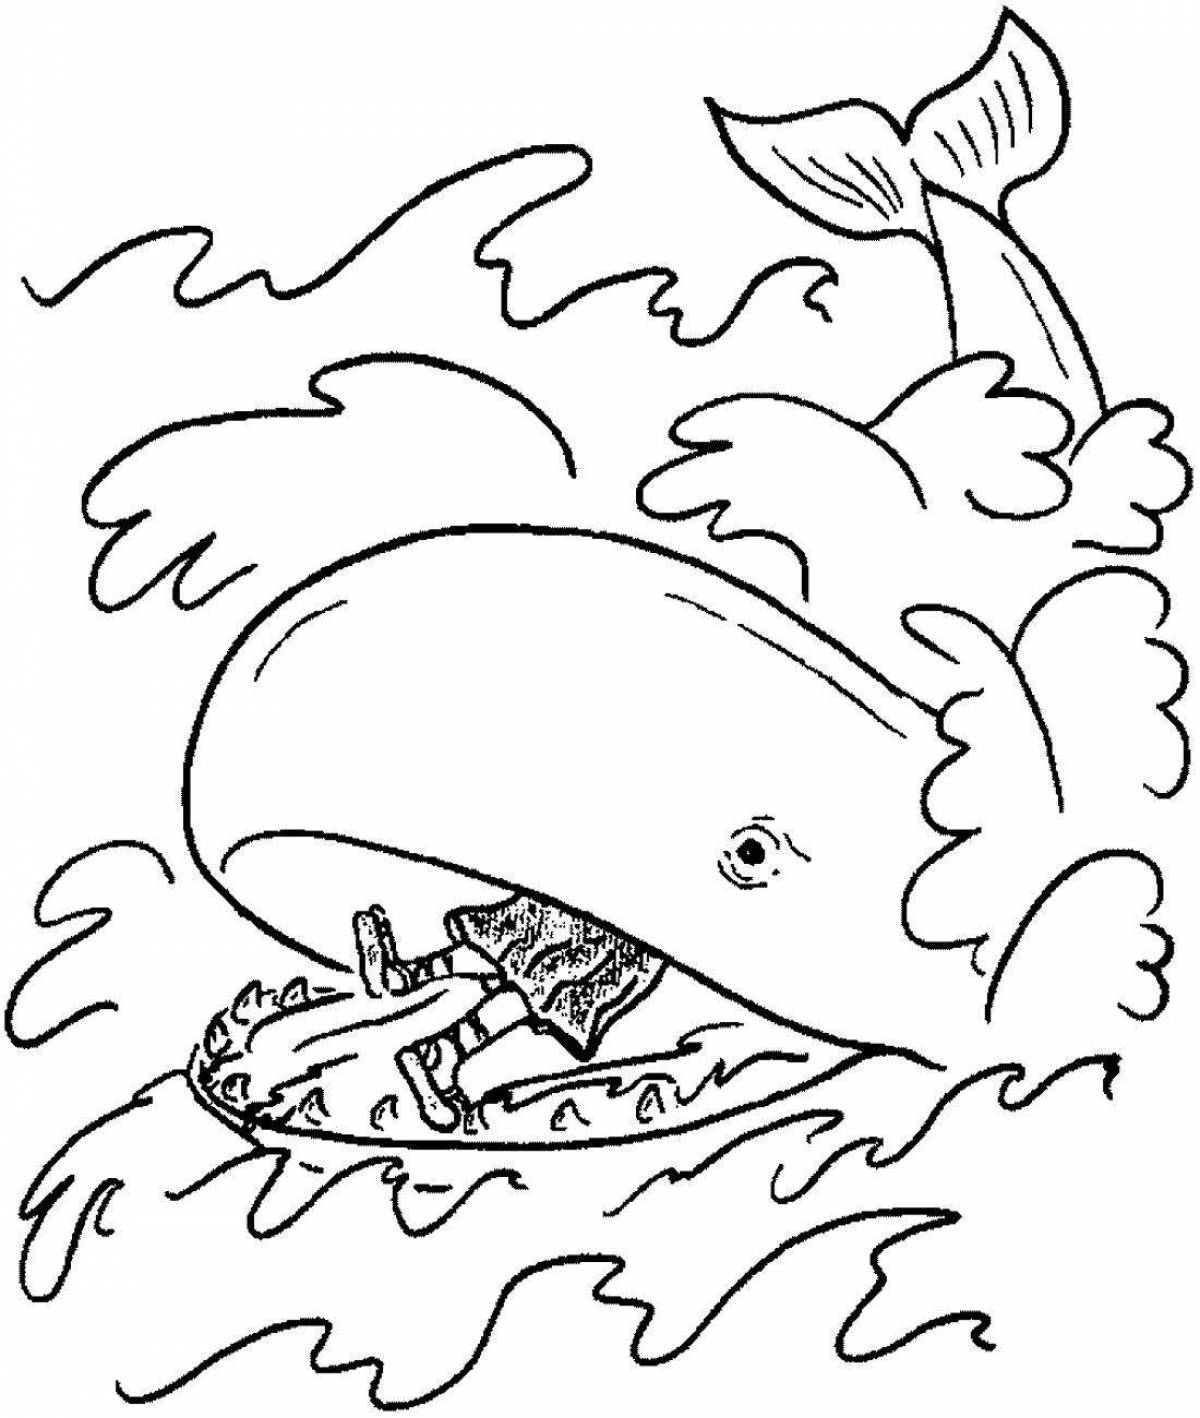 Serendipitous whale fish coloring page